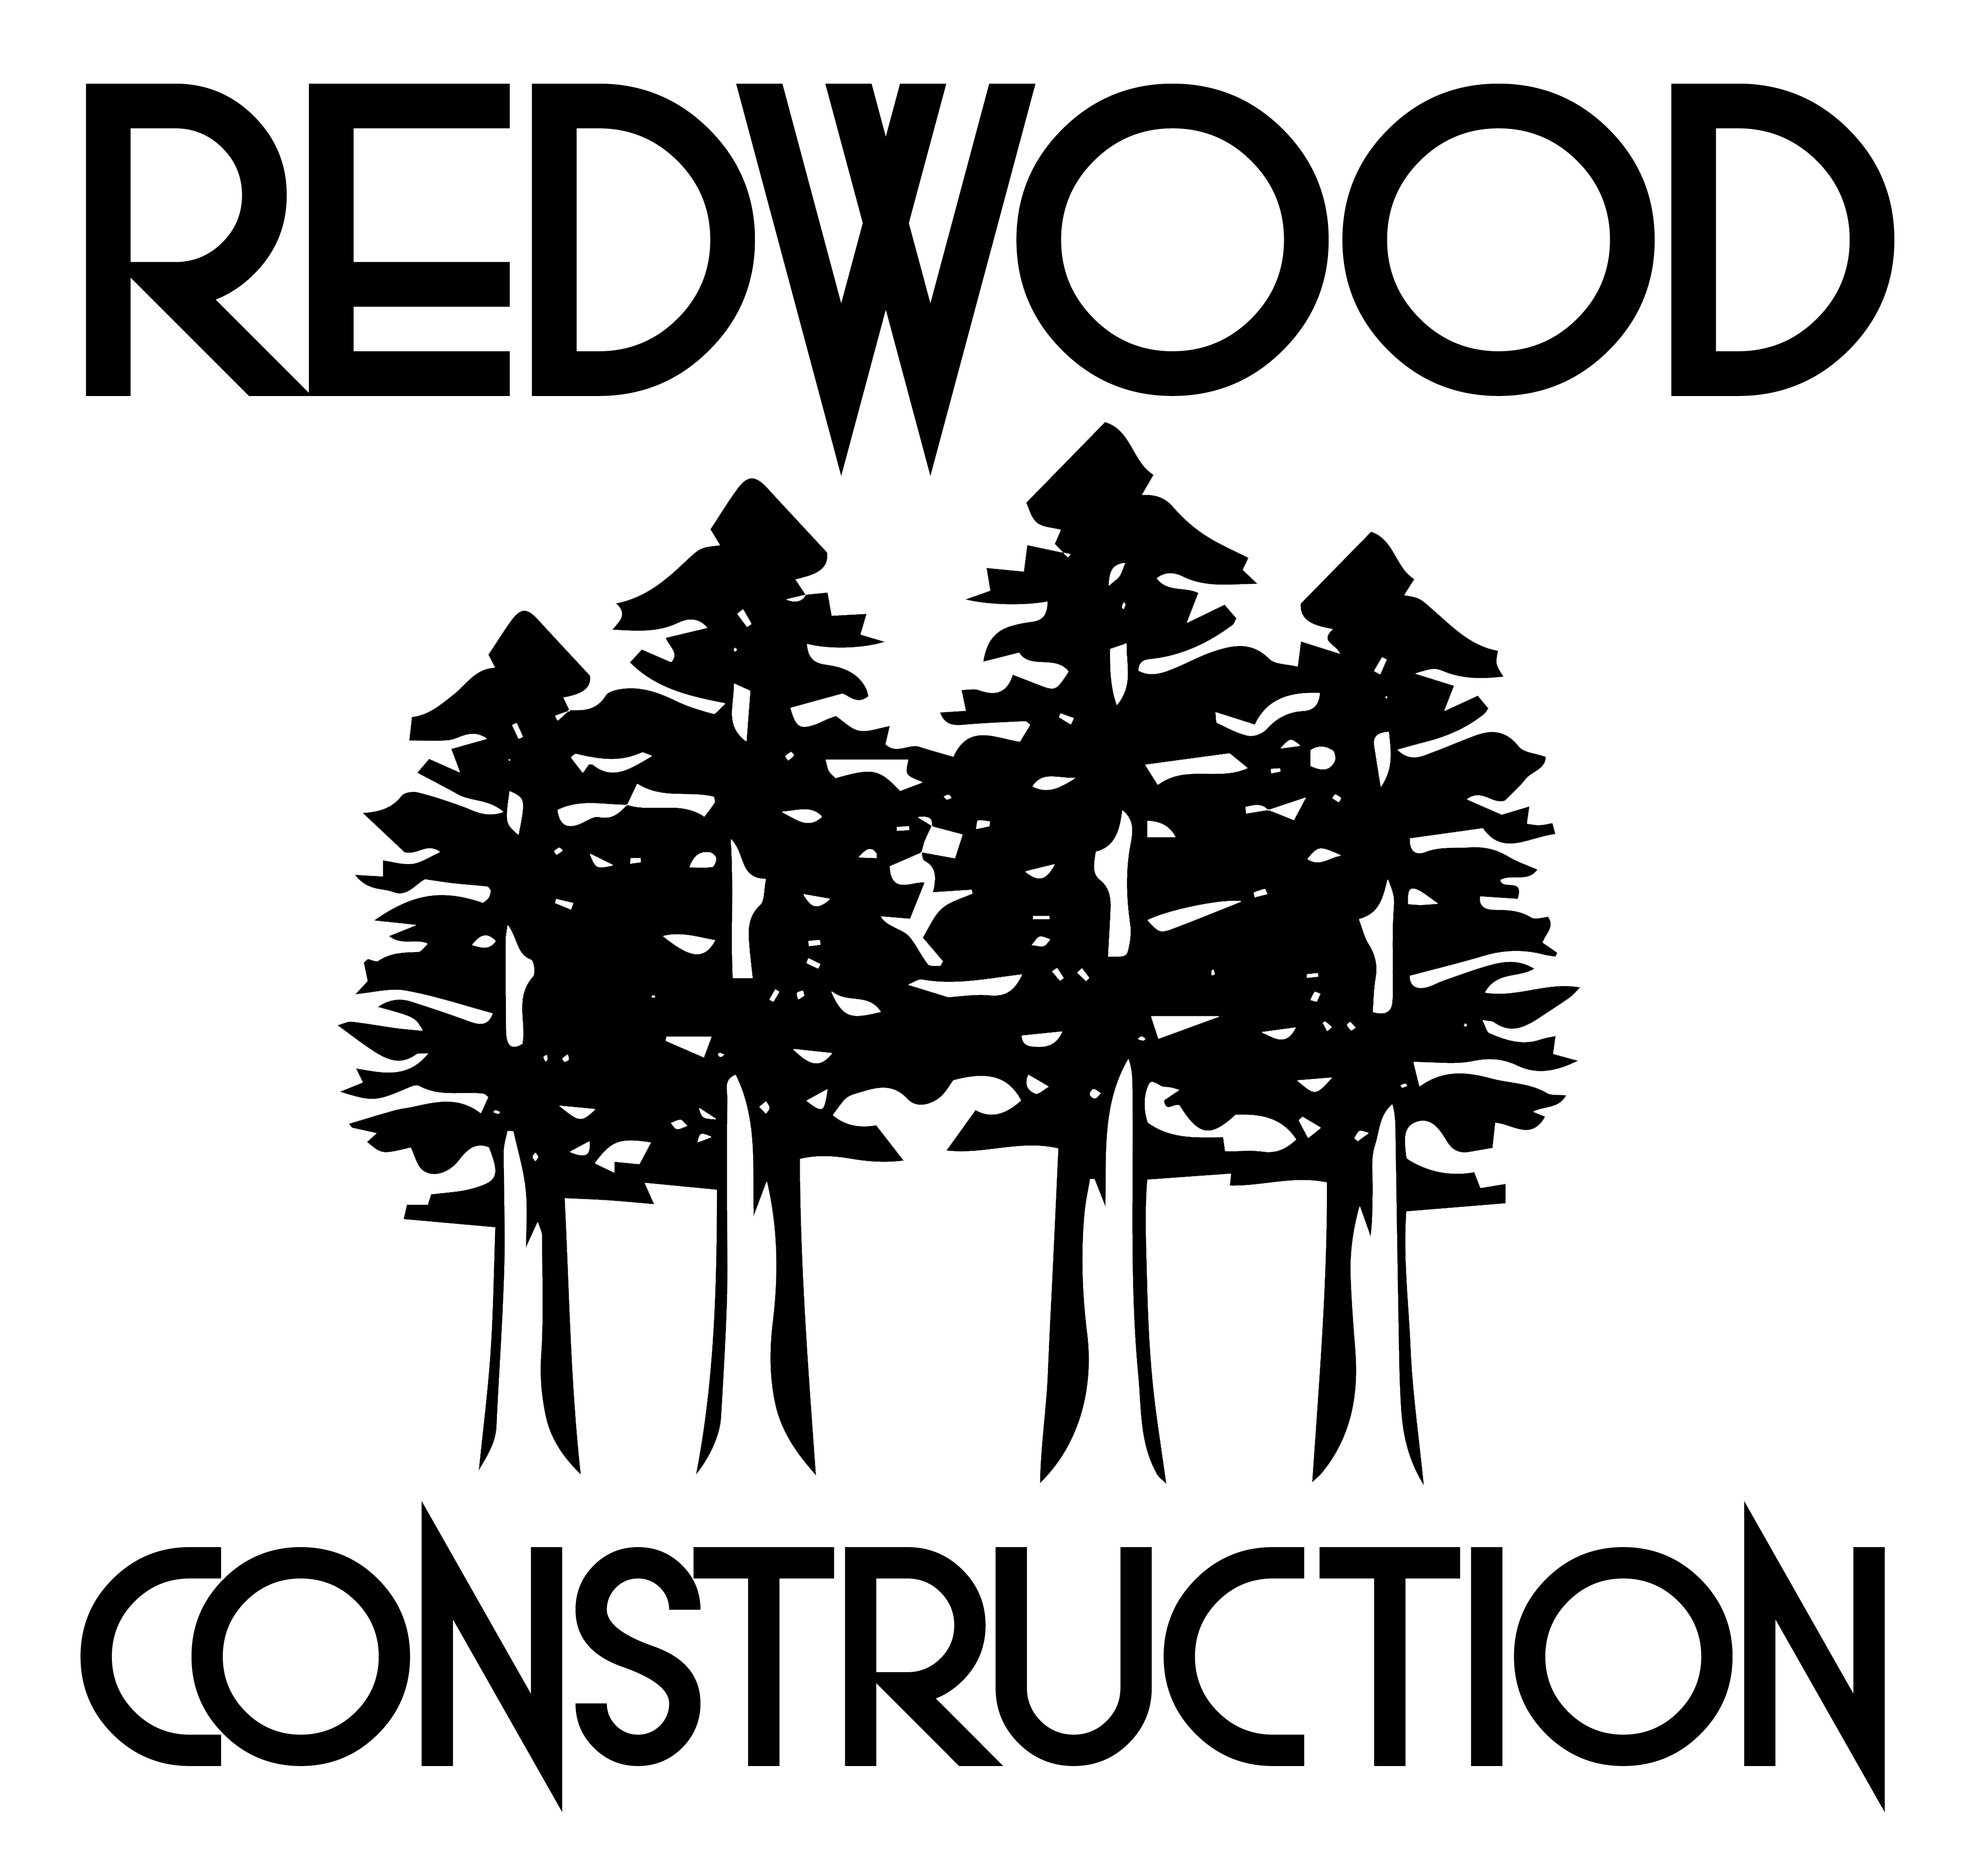 Redwood Construction Logo